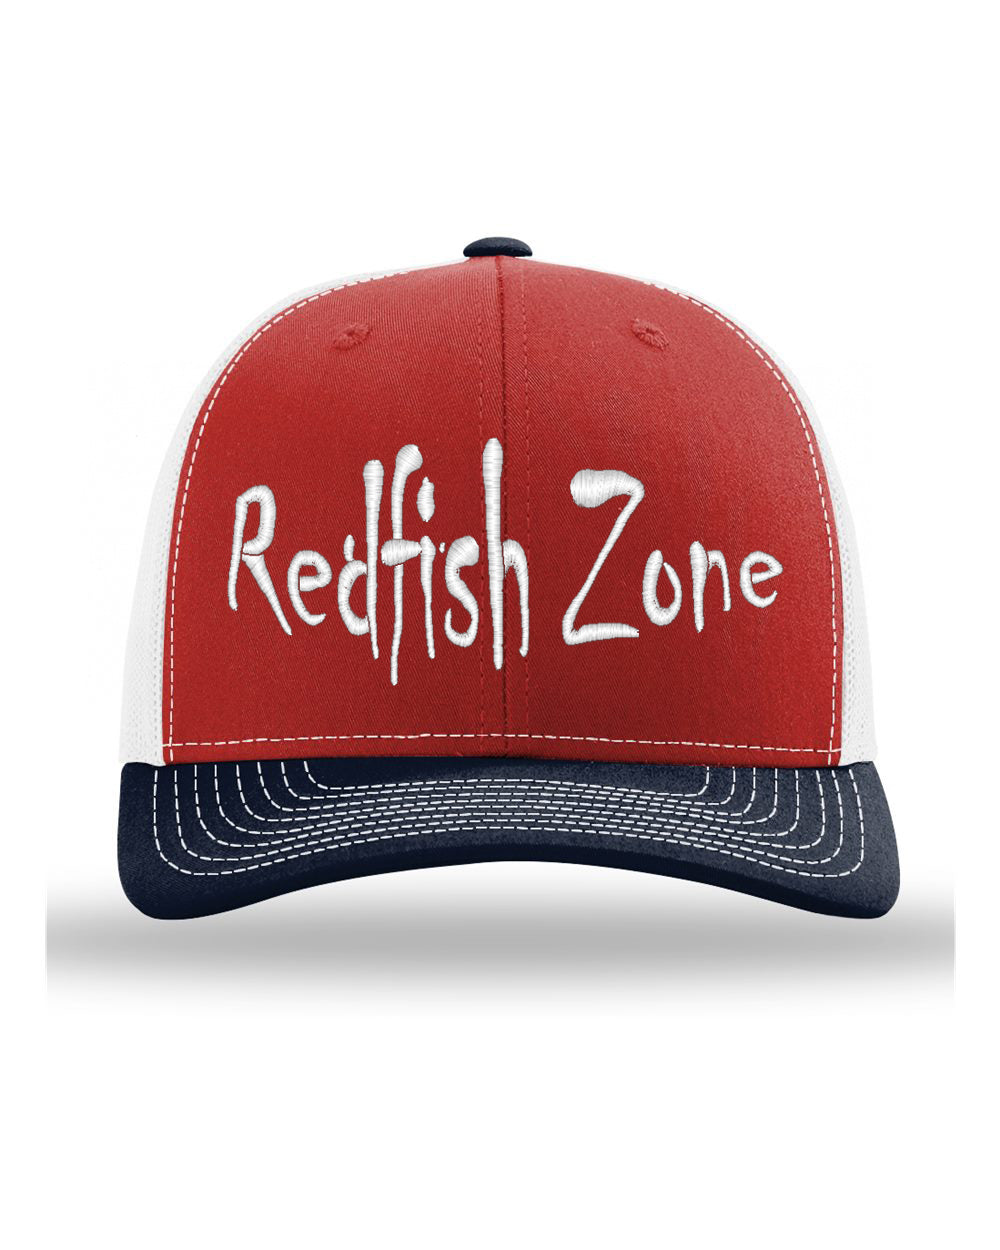 Redfish Zone,  Red/White/Blue Redfish Zone Trucker Snapback With Raised White Lettering.